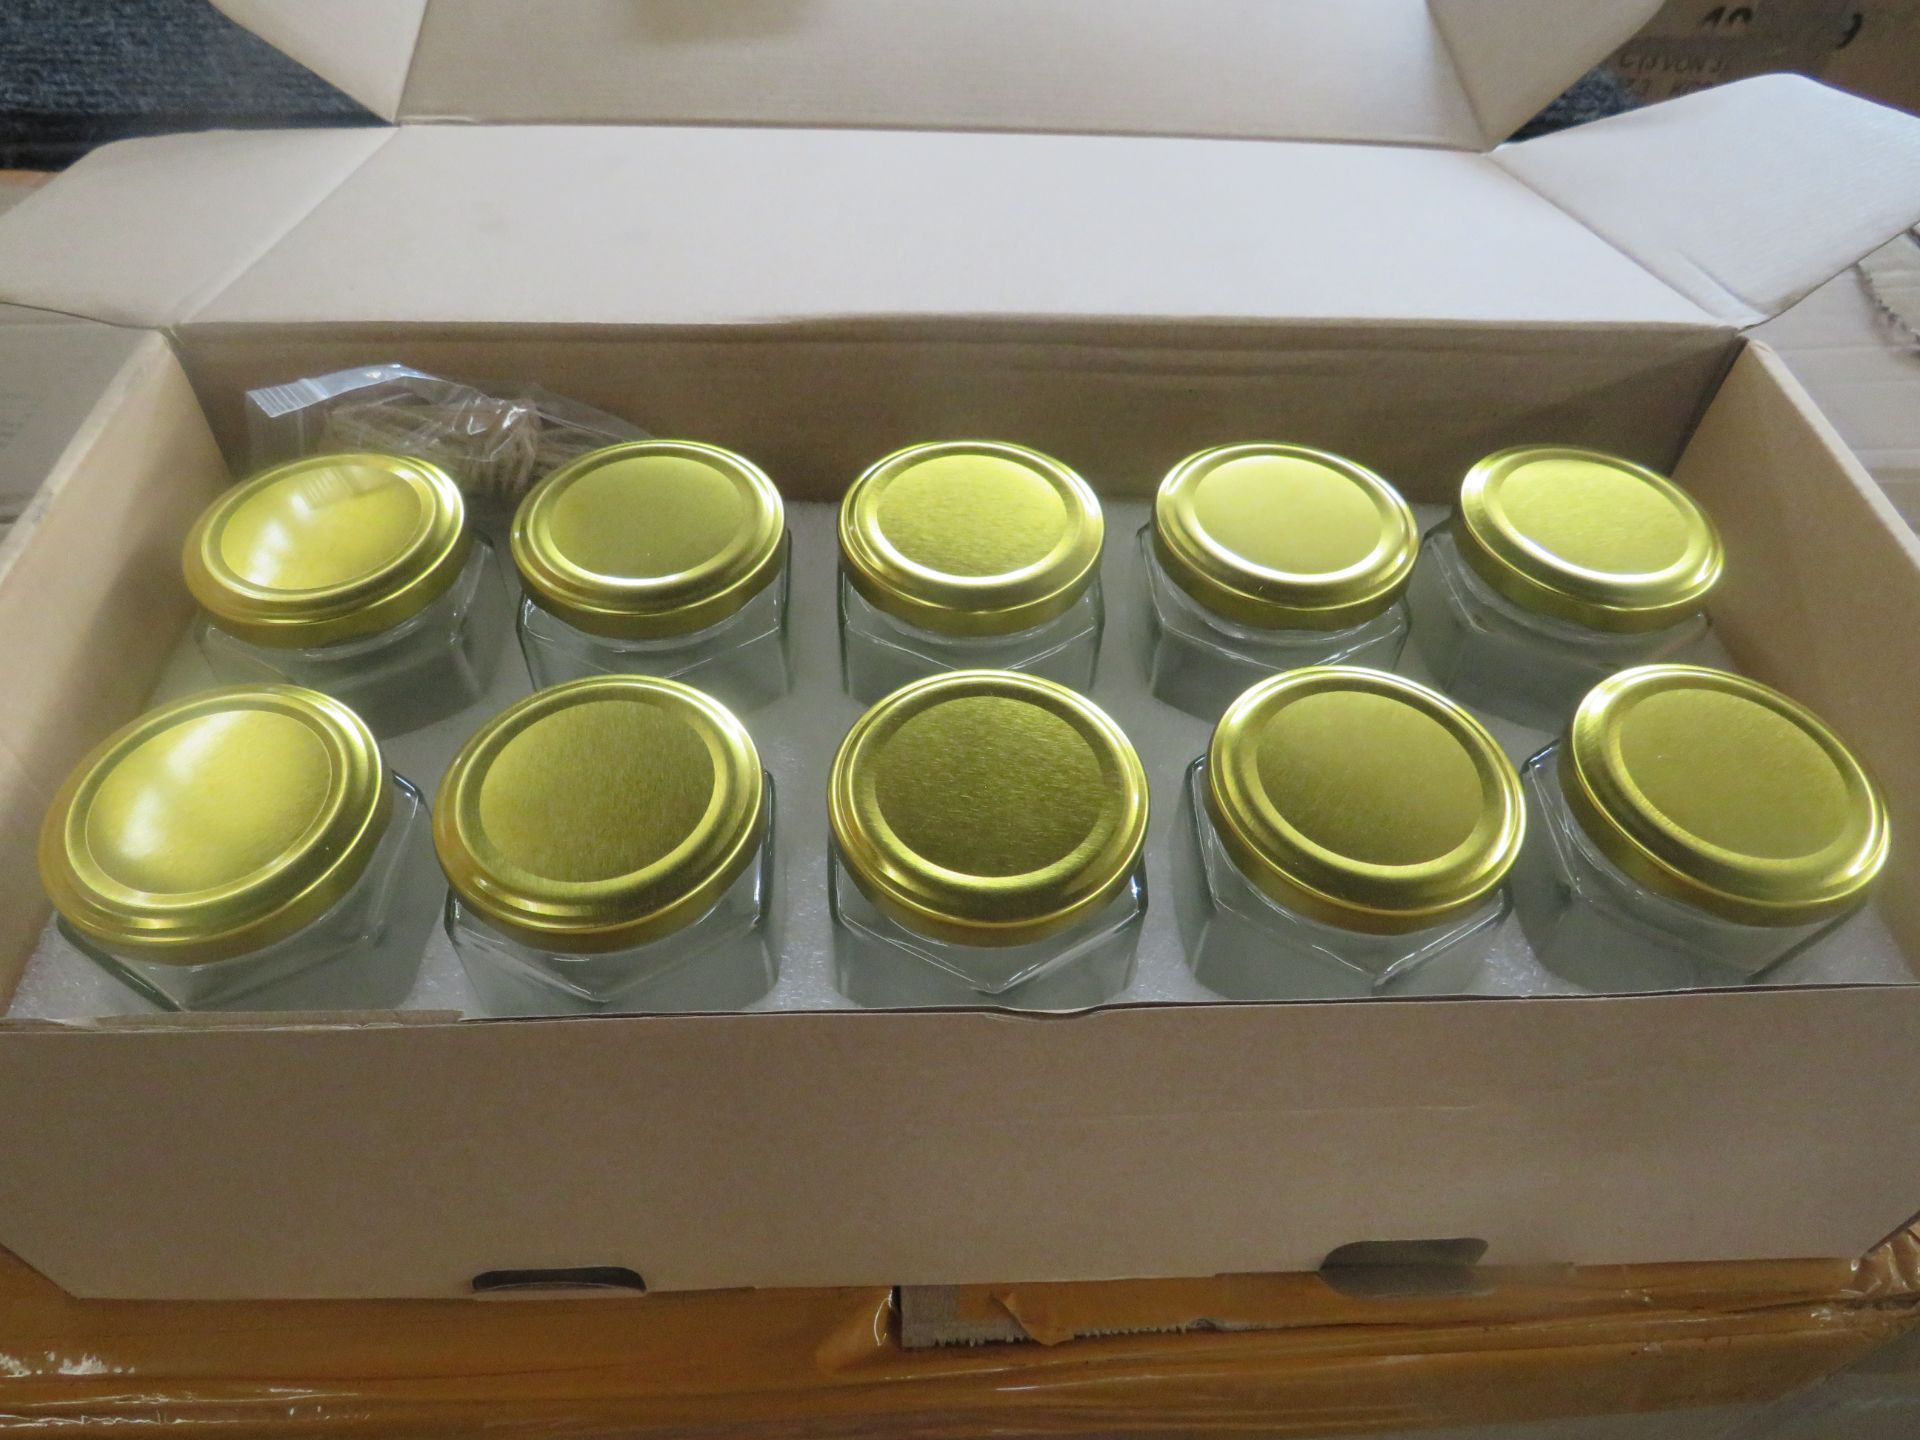 2x HEMOTON 10pcs Jam Jars Glass Spice Jars Portable Useful Honey Jars for Home Kitchen Wedding